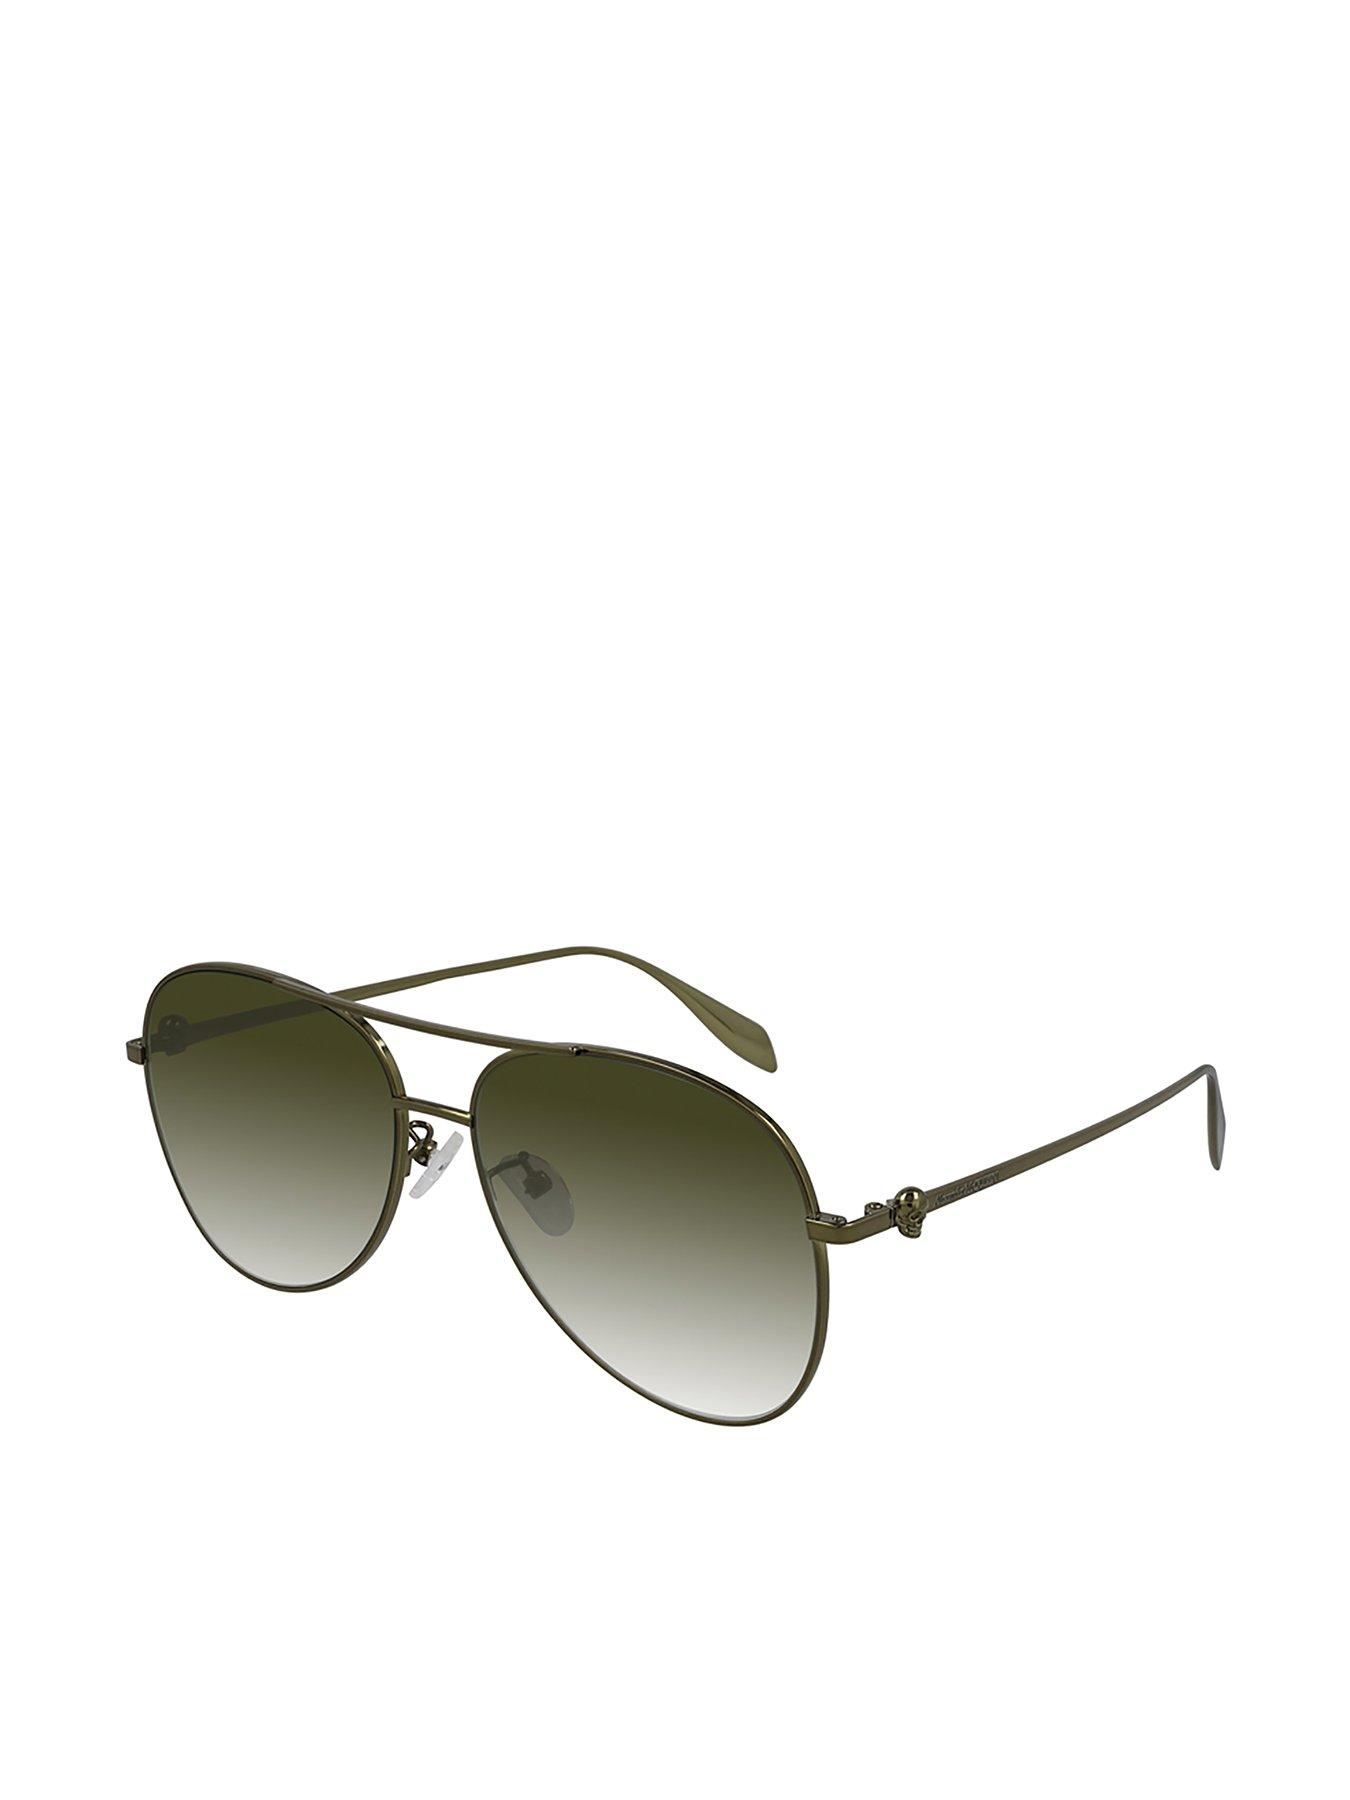  Pilot Sunglasses - Green